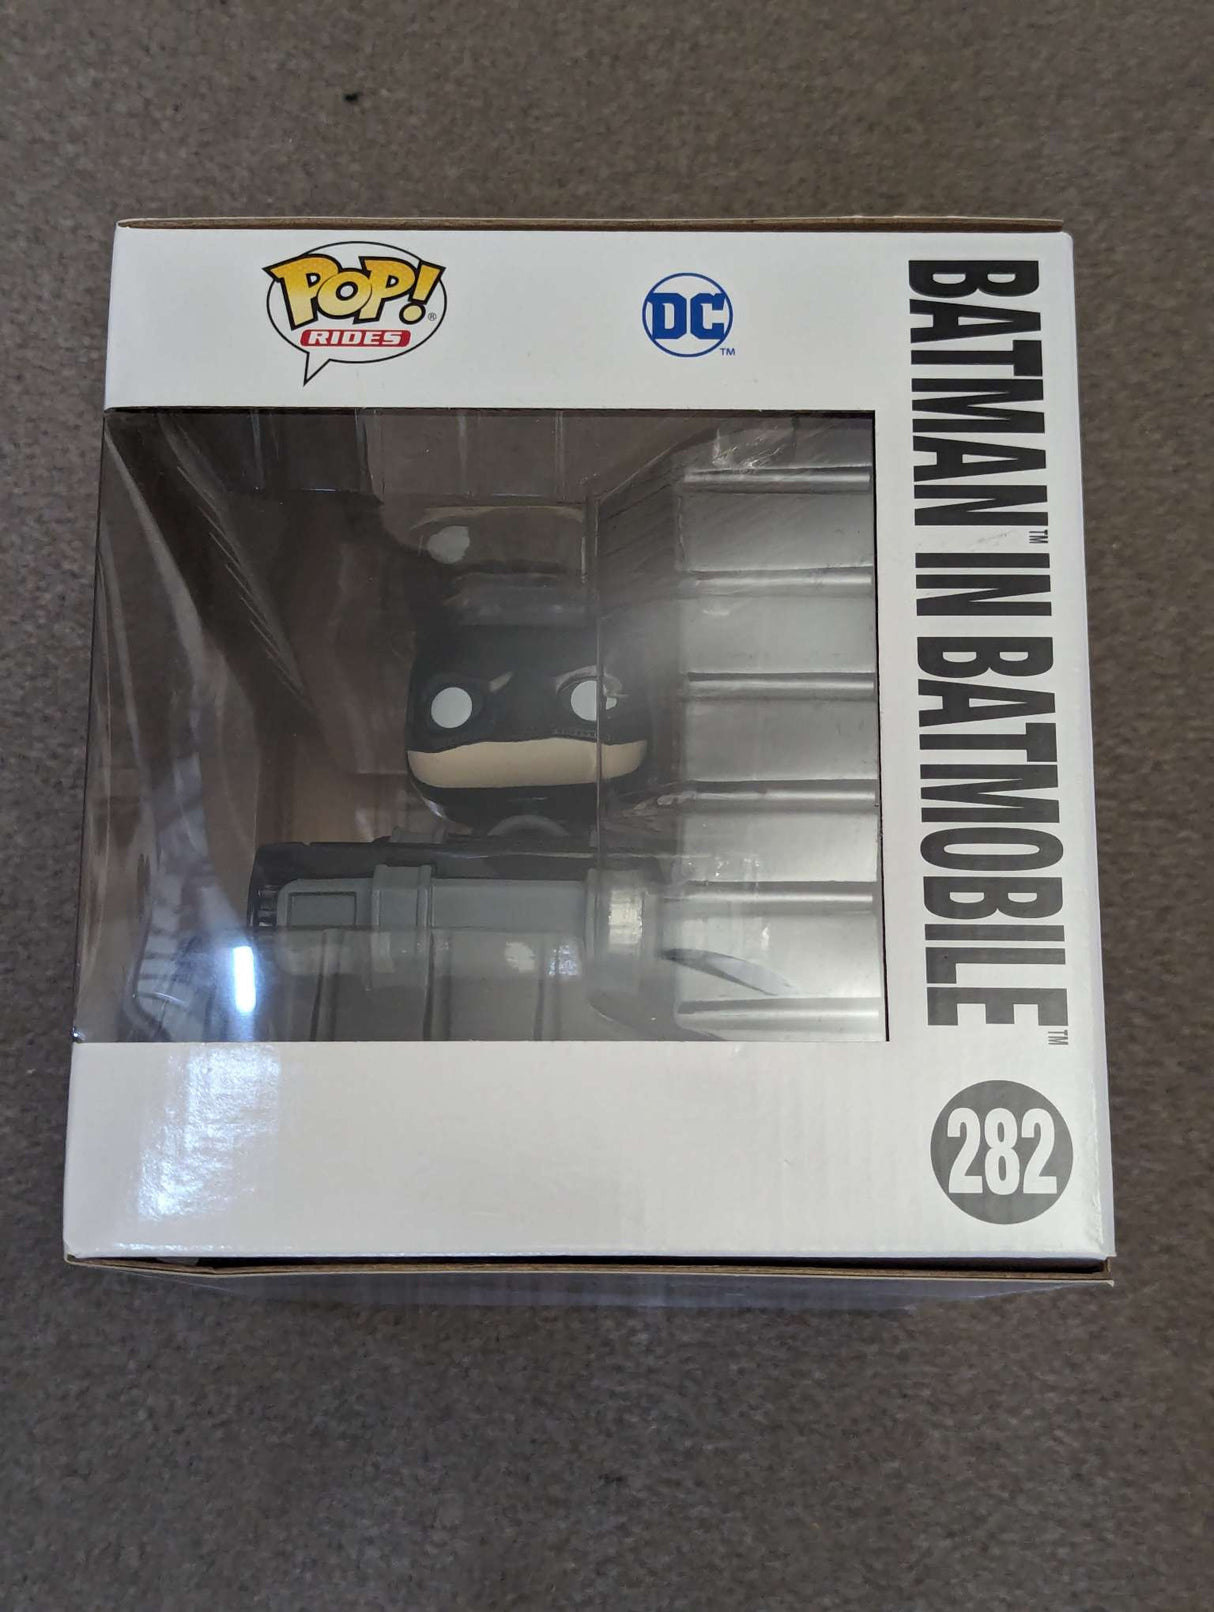 Damaged Box| Funko Pop Rides | Batman in Batmobile #282